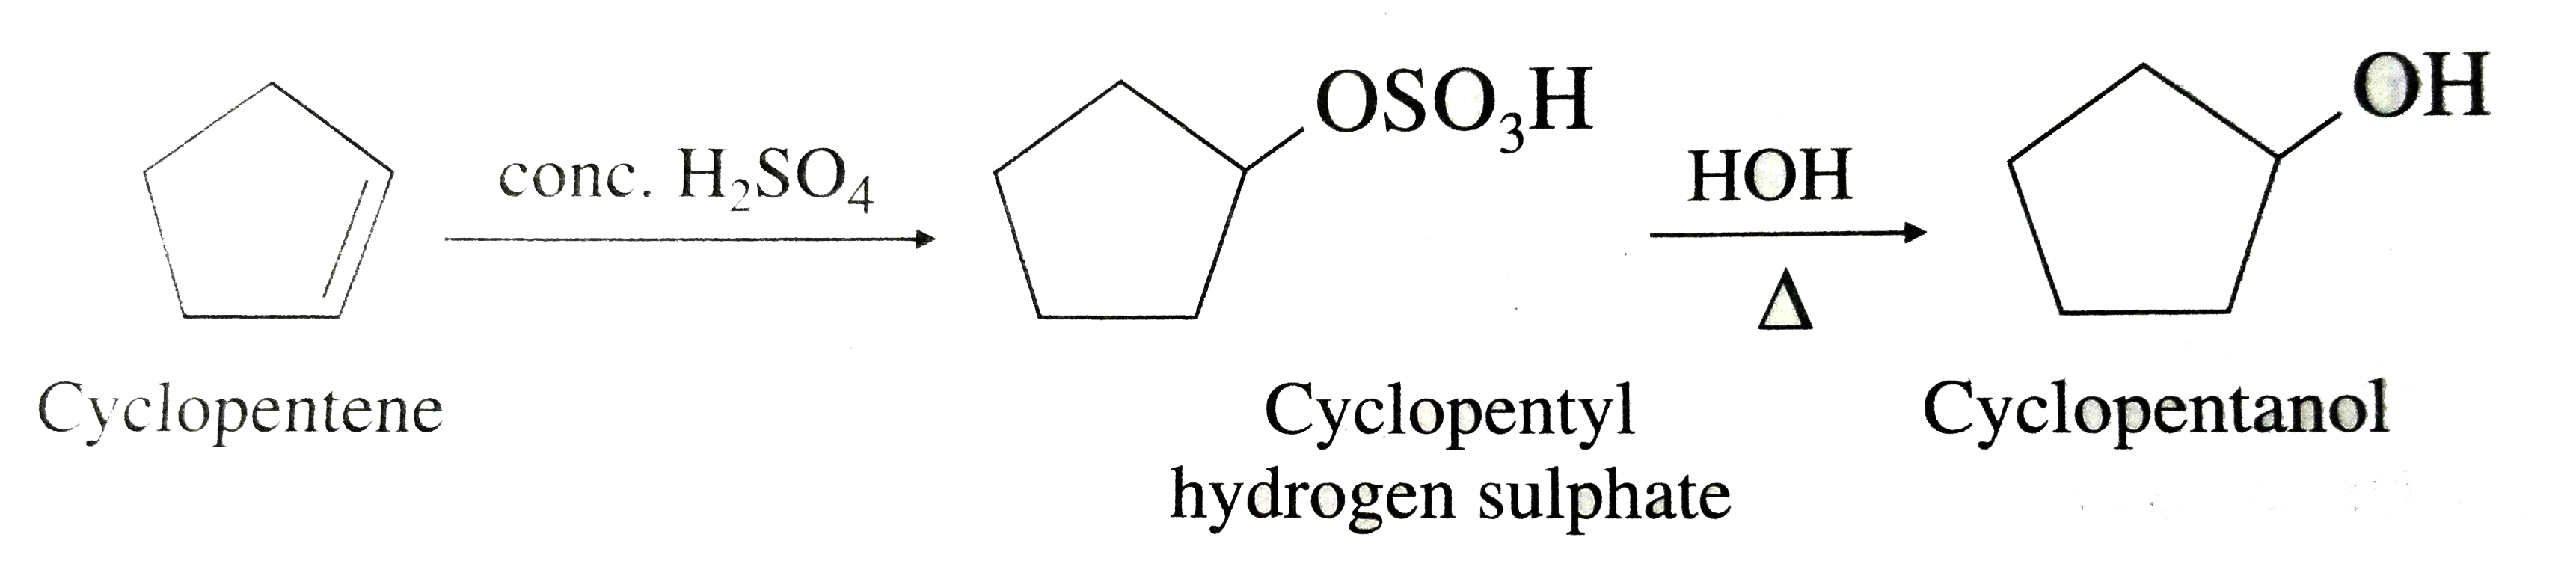 How is cyclopentanol prepared from (1) cyclopentanone (2) cyclopentene?